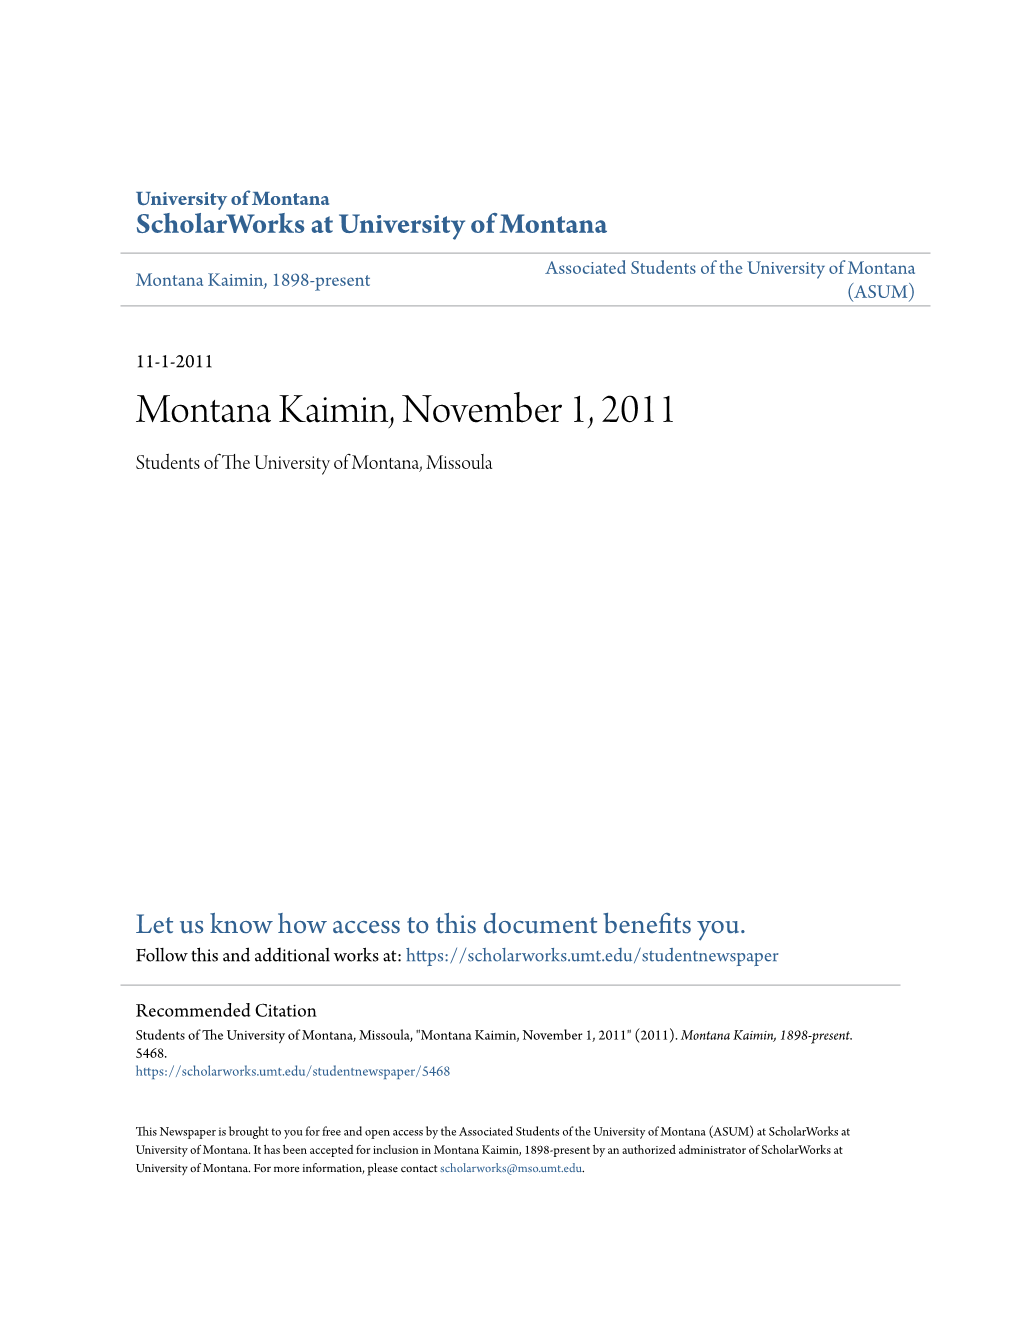 Montana Kaimin, November 1, 2011 Students of the Niu Versity of Montana, Missoula